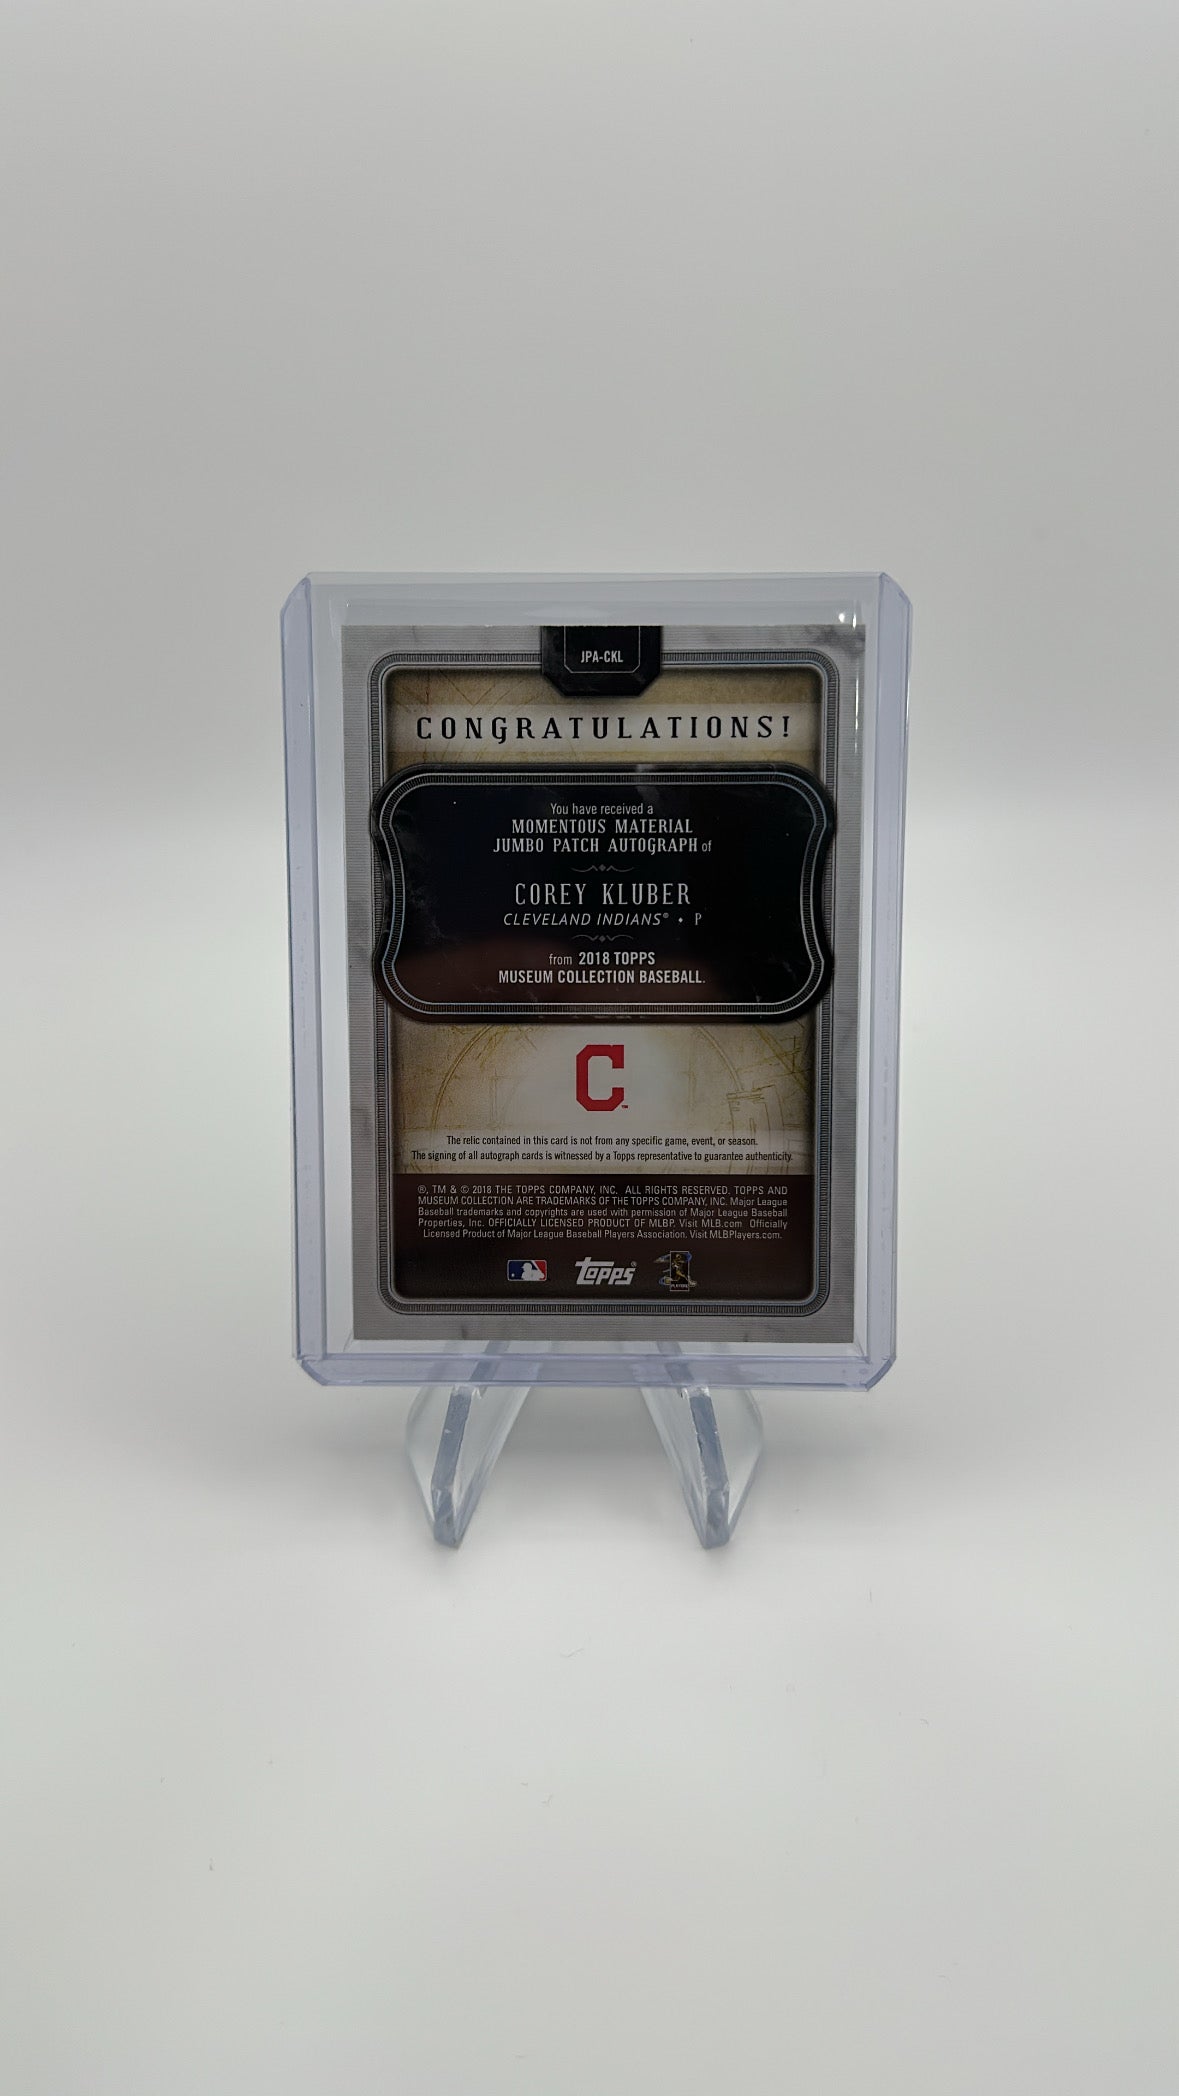 2018 Topps Museum Collection Baseball - Corey Kluber JPA-CKL - Momentous Material Jumbo Patch Autograph /5